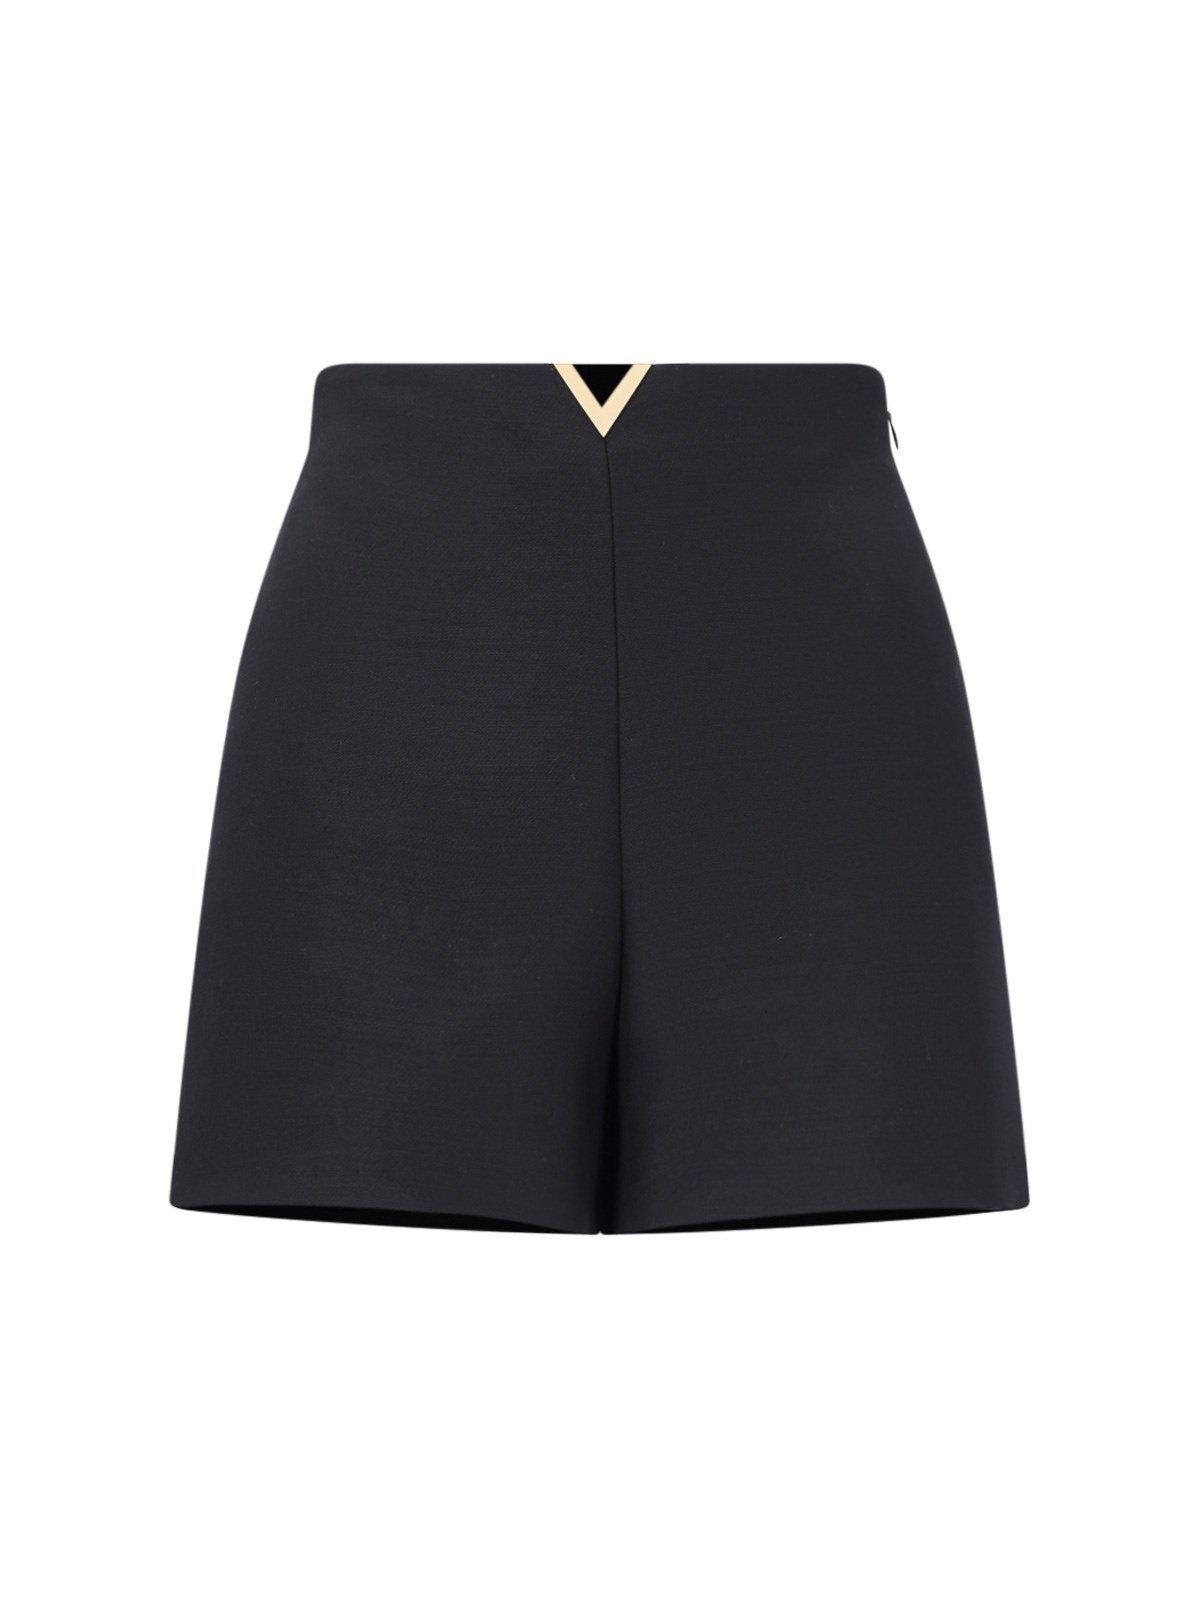 Valentino 'v Gold' Shorts In Black